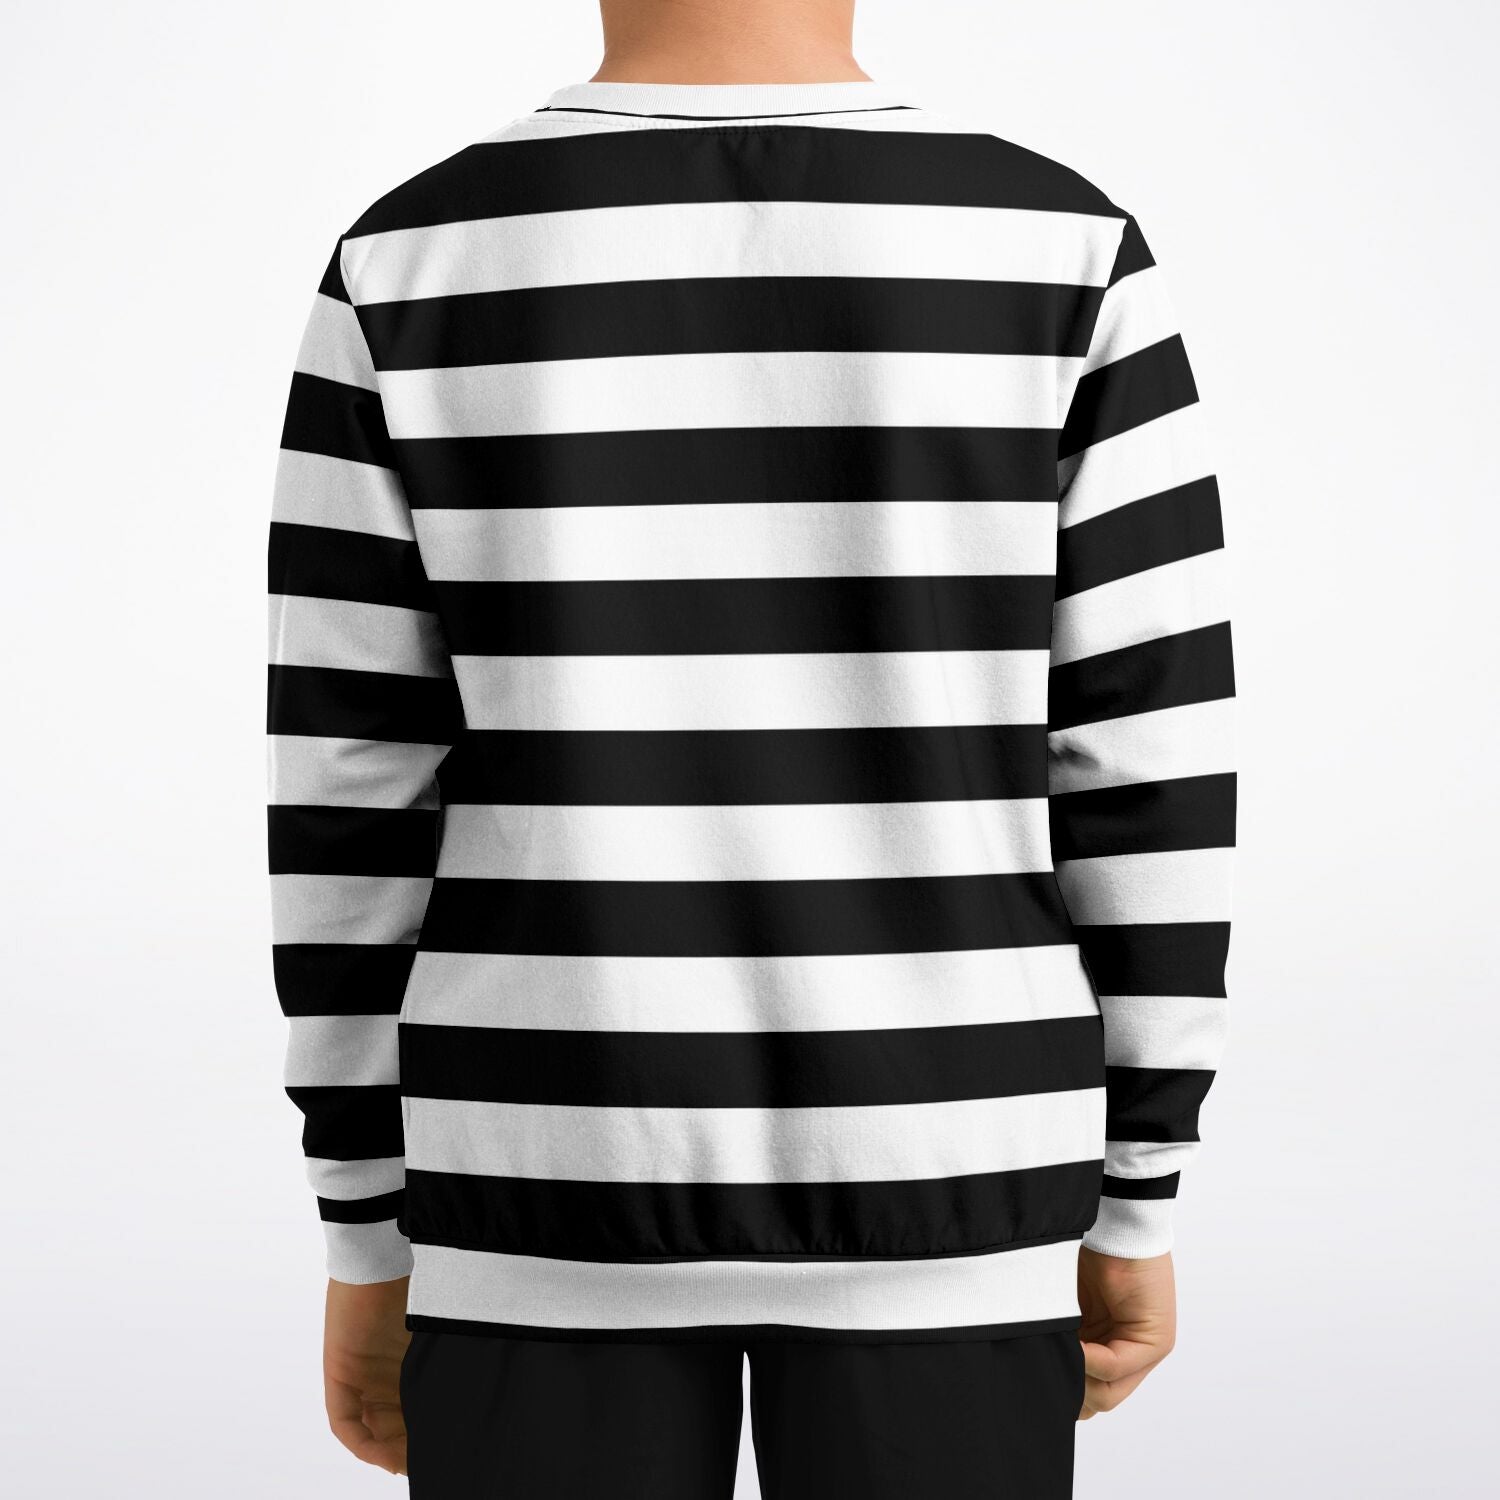 Prison Stripes Youth Unisex Costume Sweatshirt